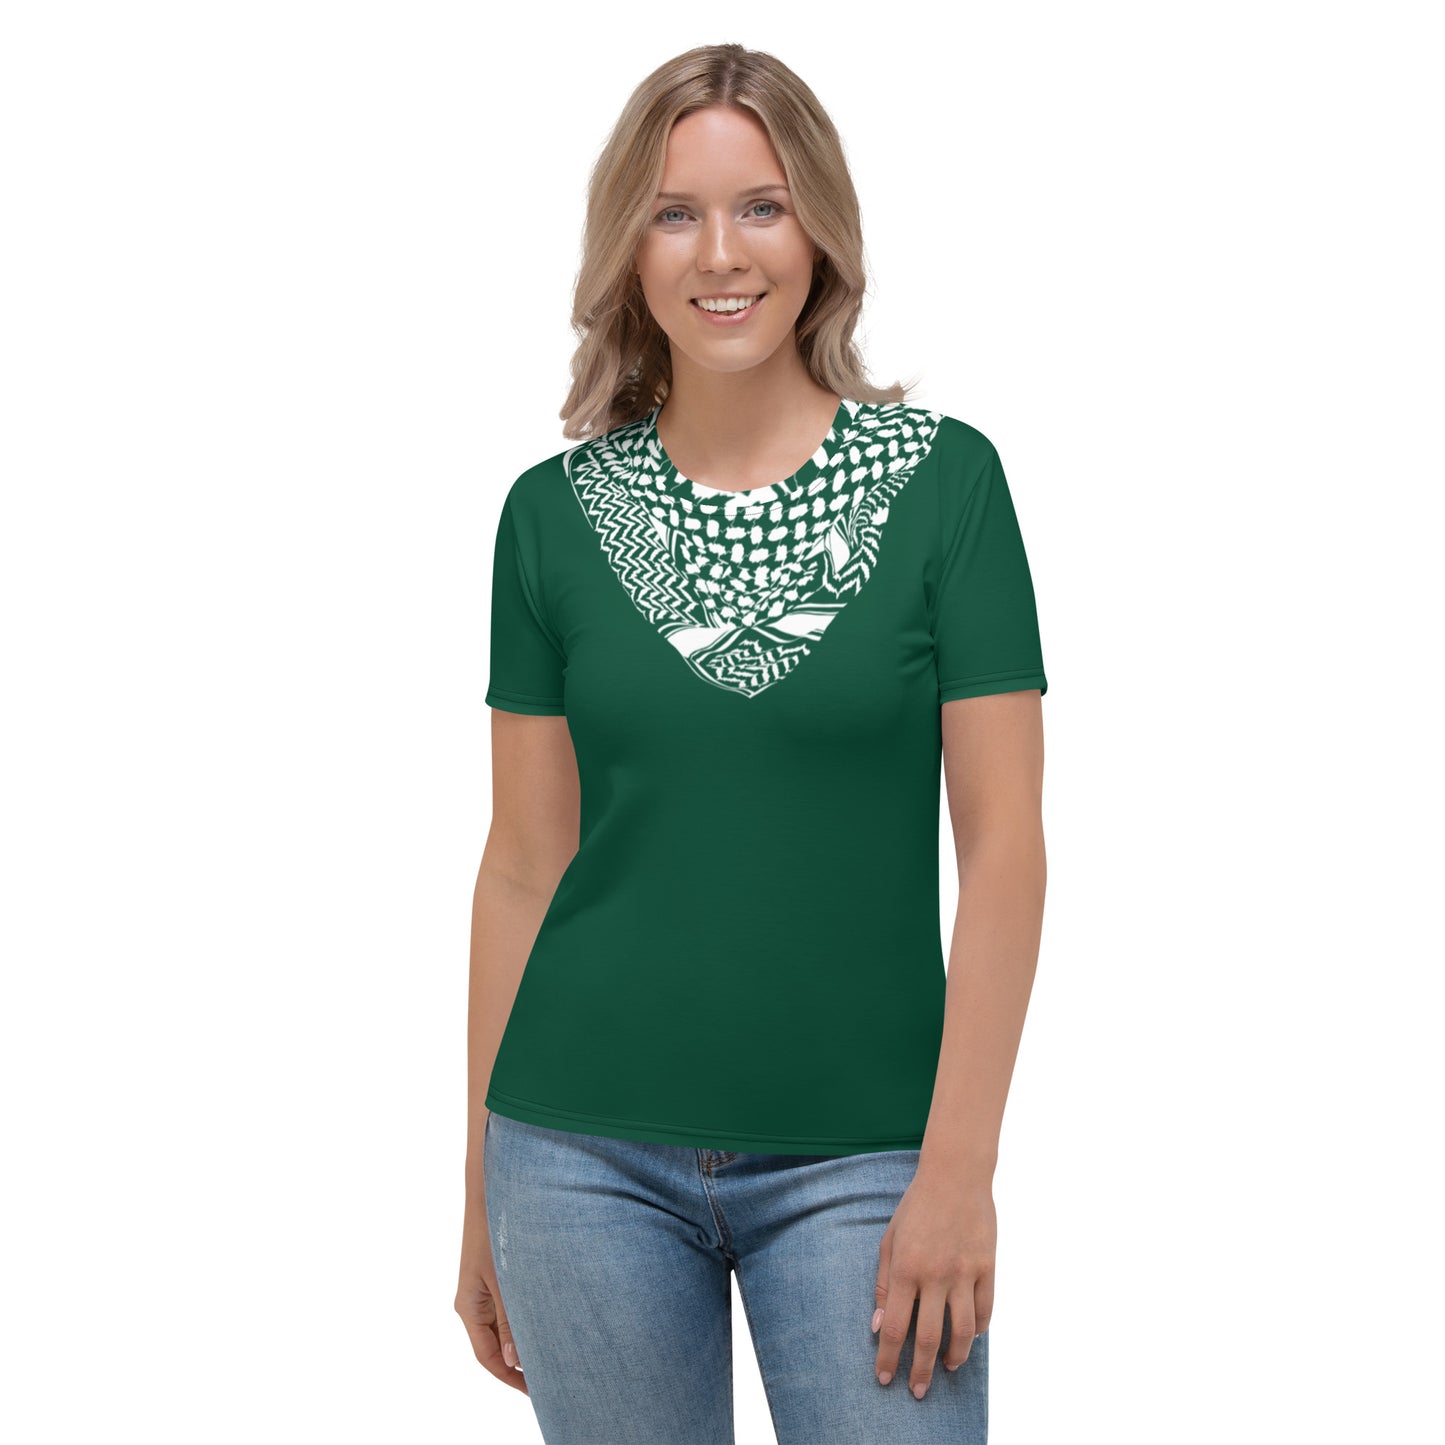 Saudi National Day Keffiyeh White on Green Women's T-shirt